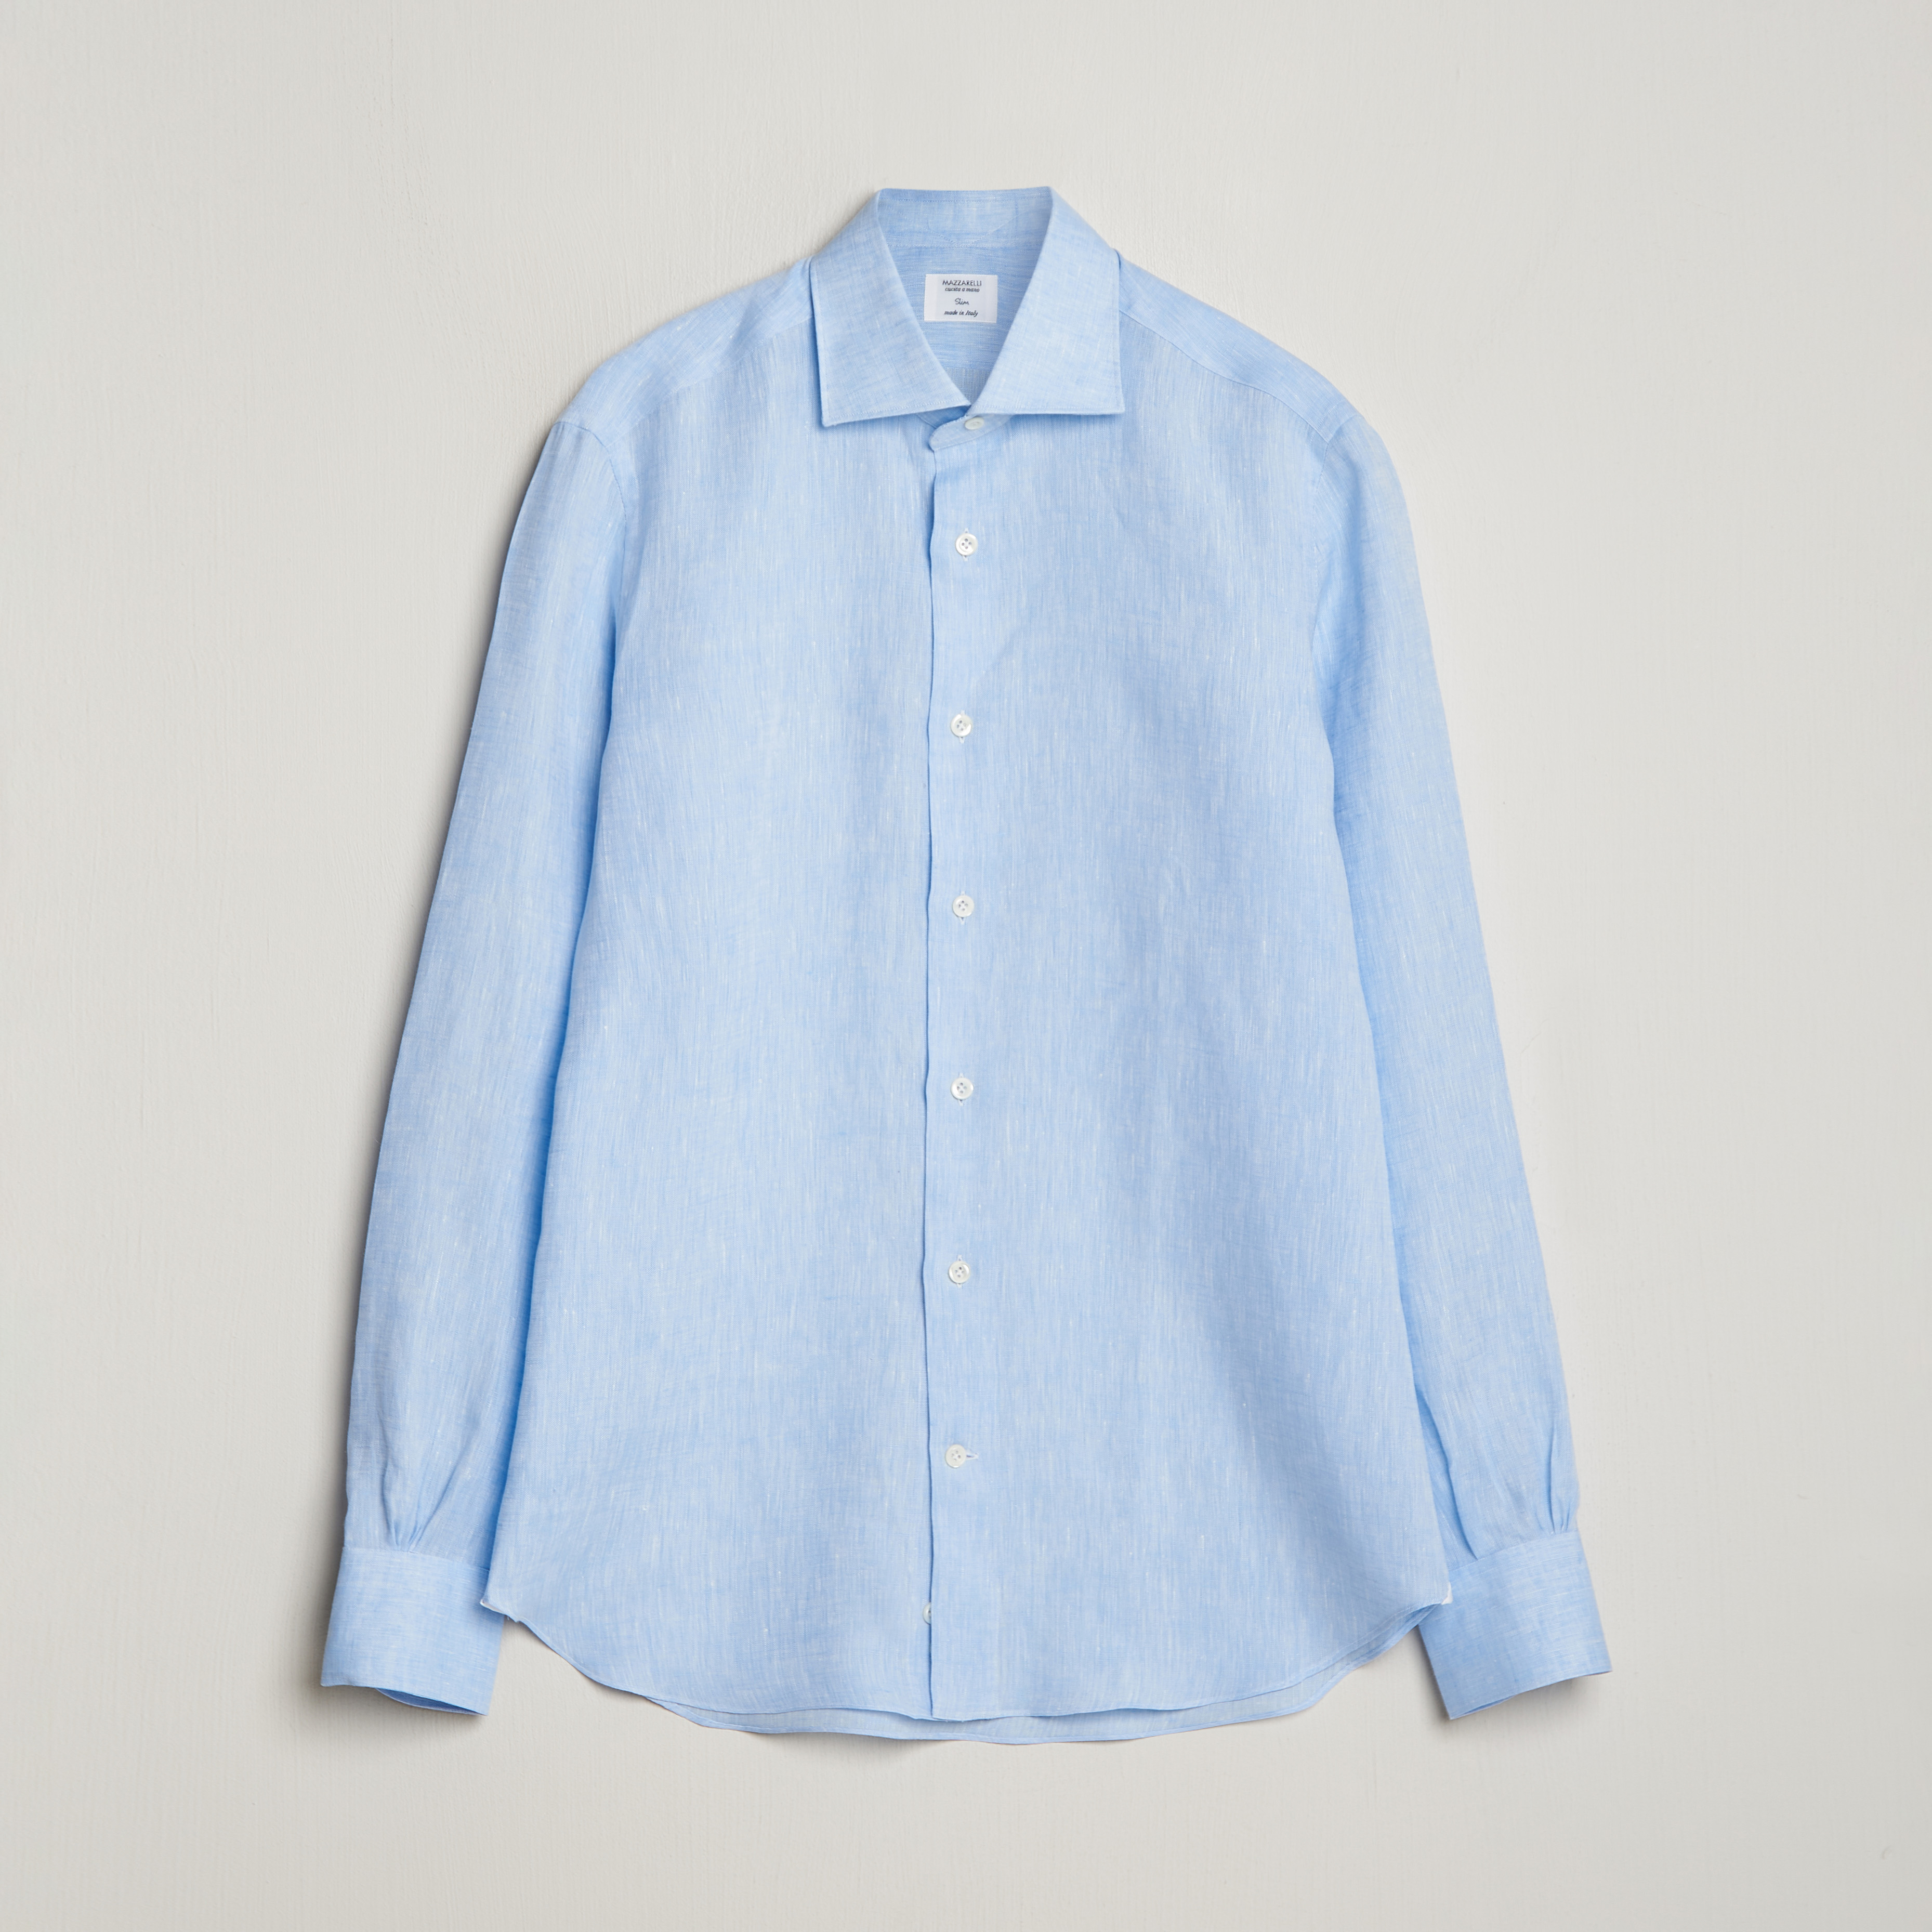 Mazzarelli Soft Linen Cut Away Shirt Light Blue at CareOfCarl.com